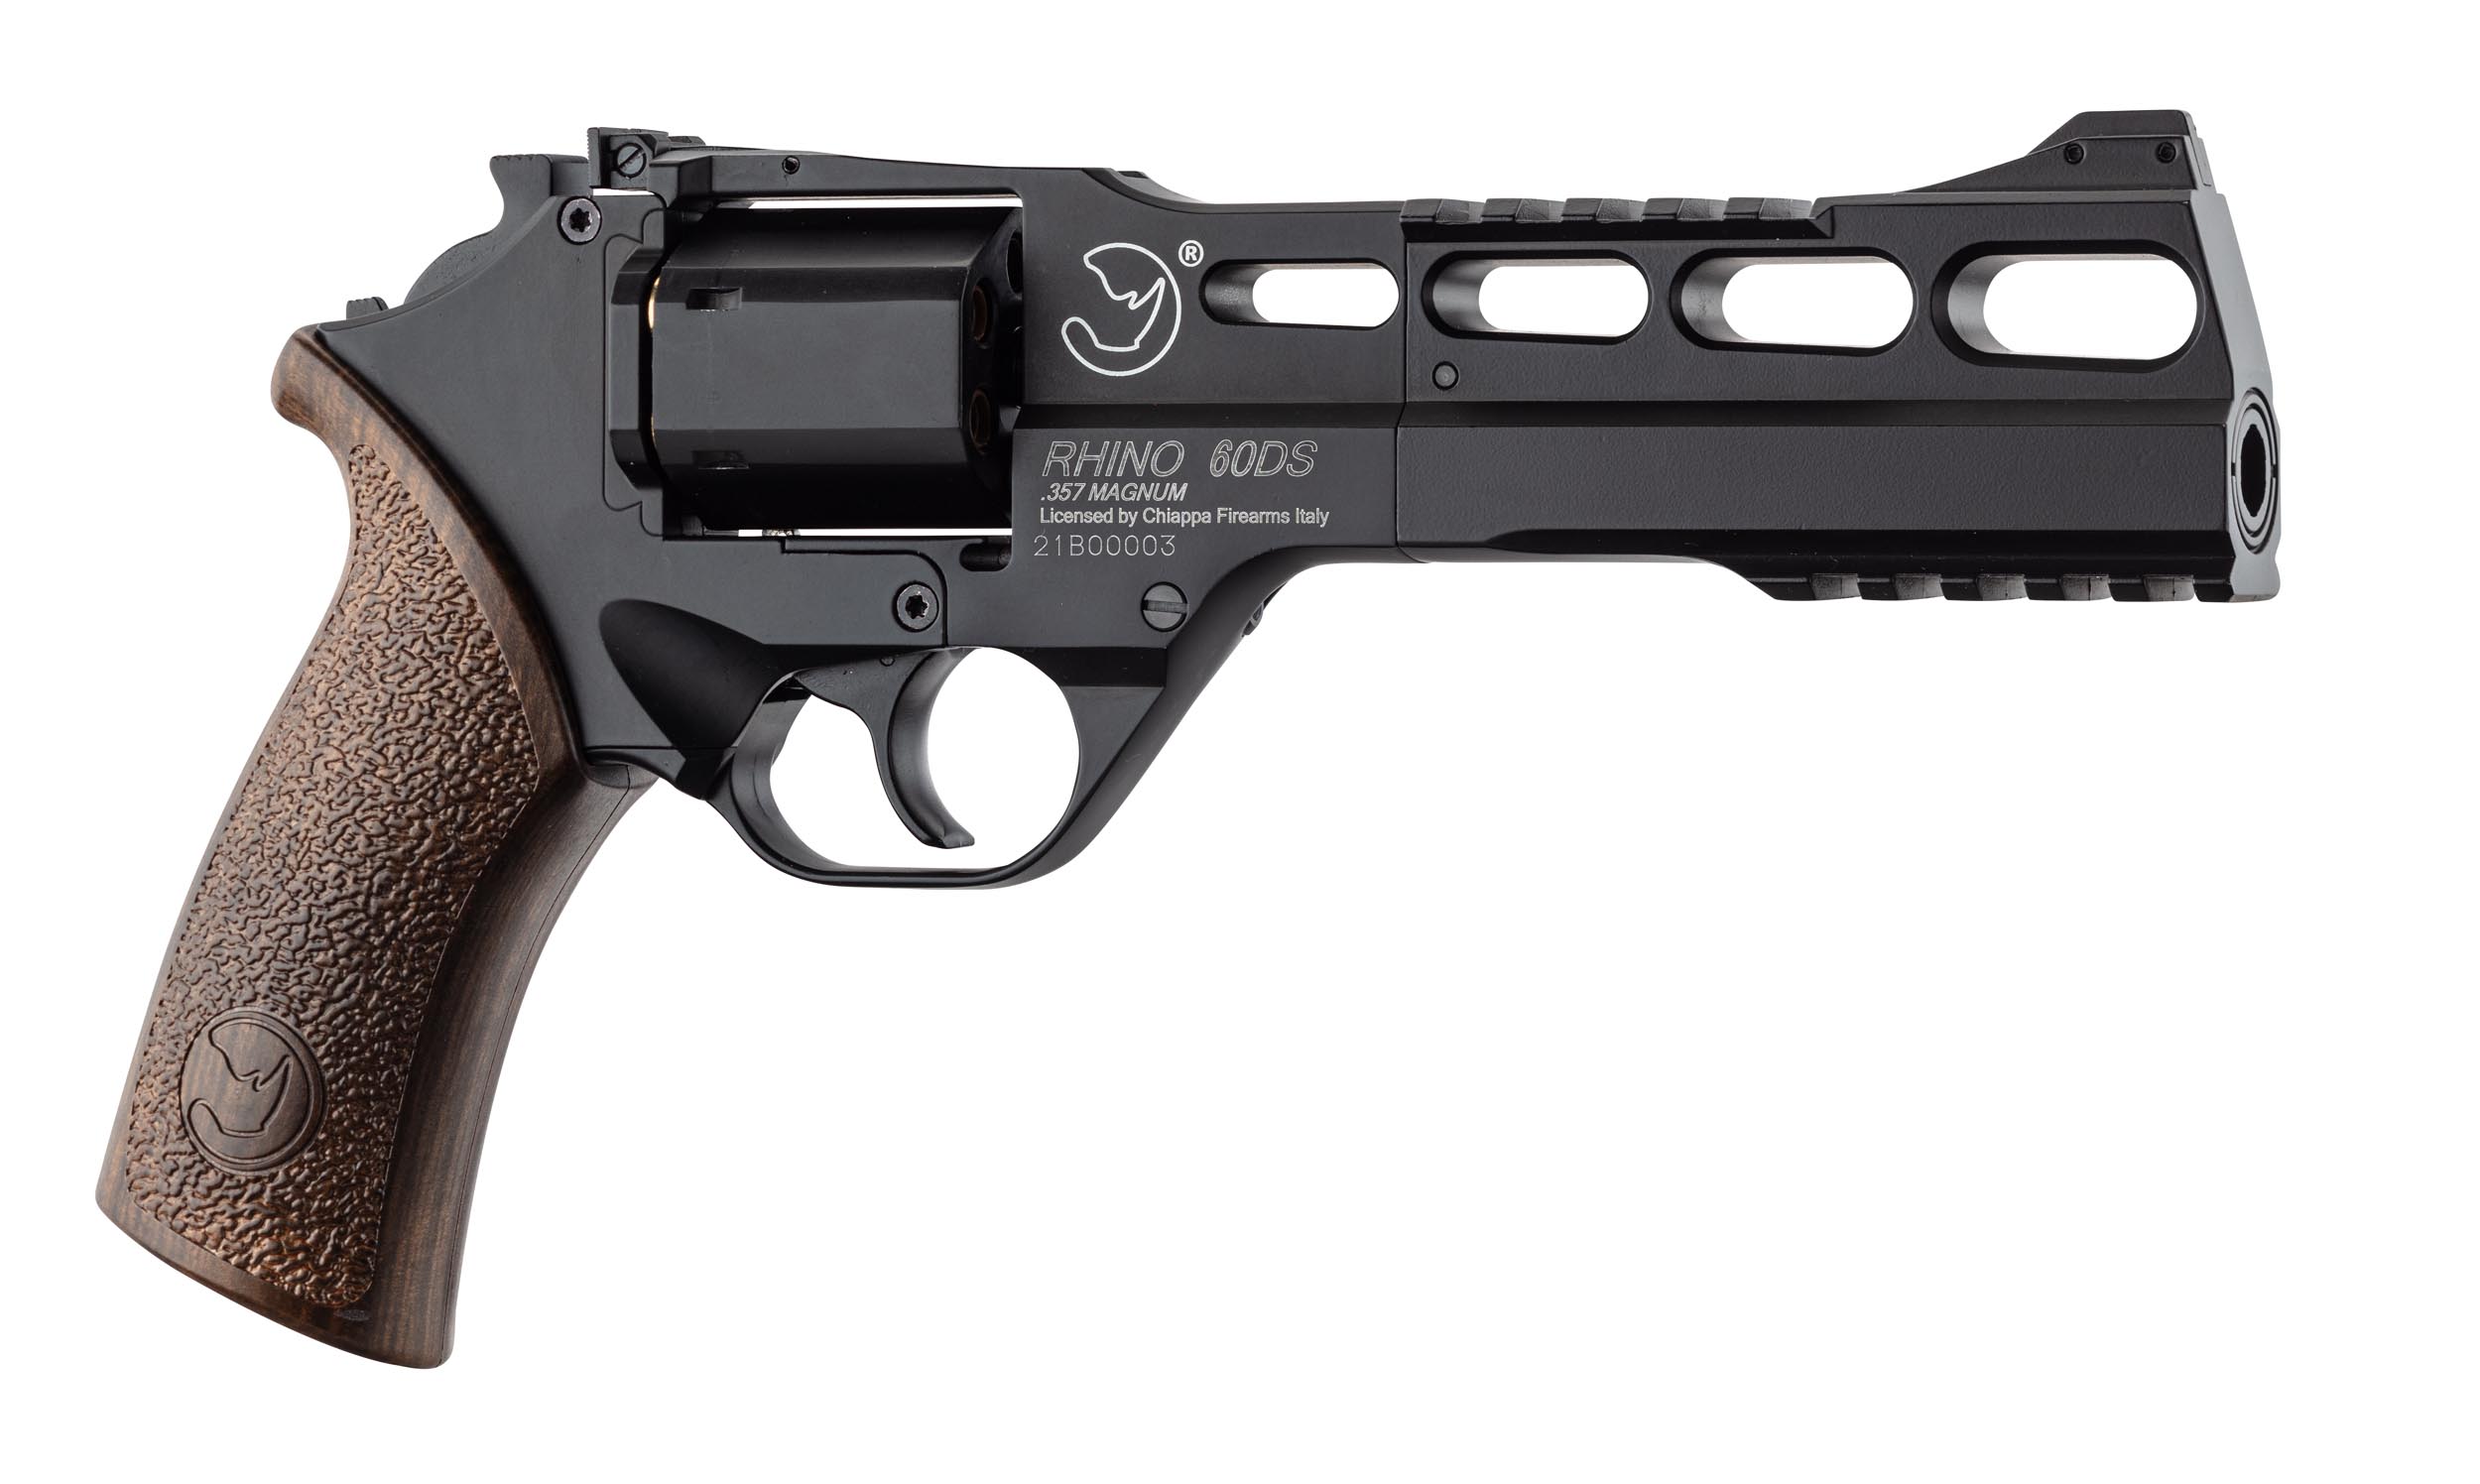 PG1058 Réplique Airsoft revolver CO2 Chiappa Rhino 60DS 0,95J - PG1059